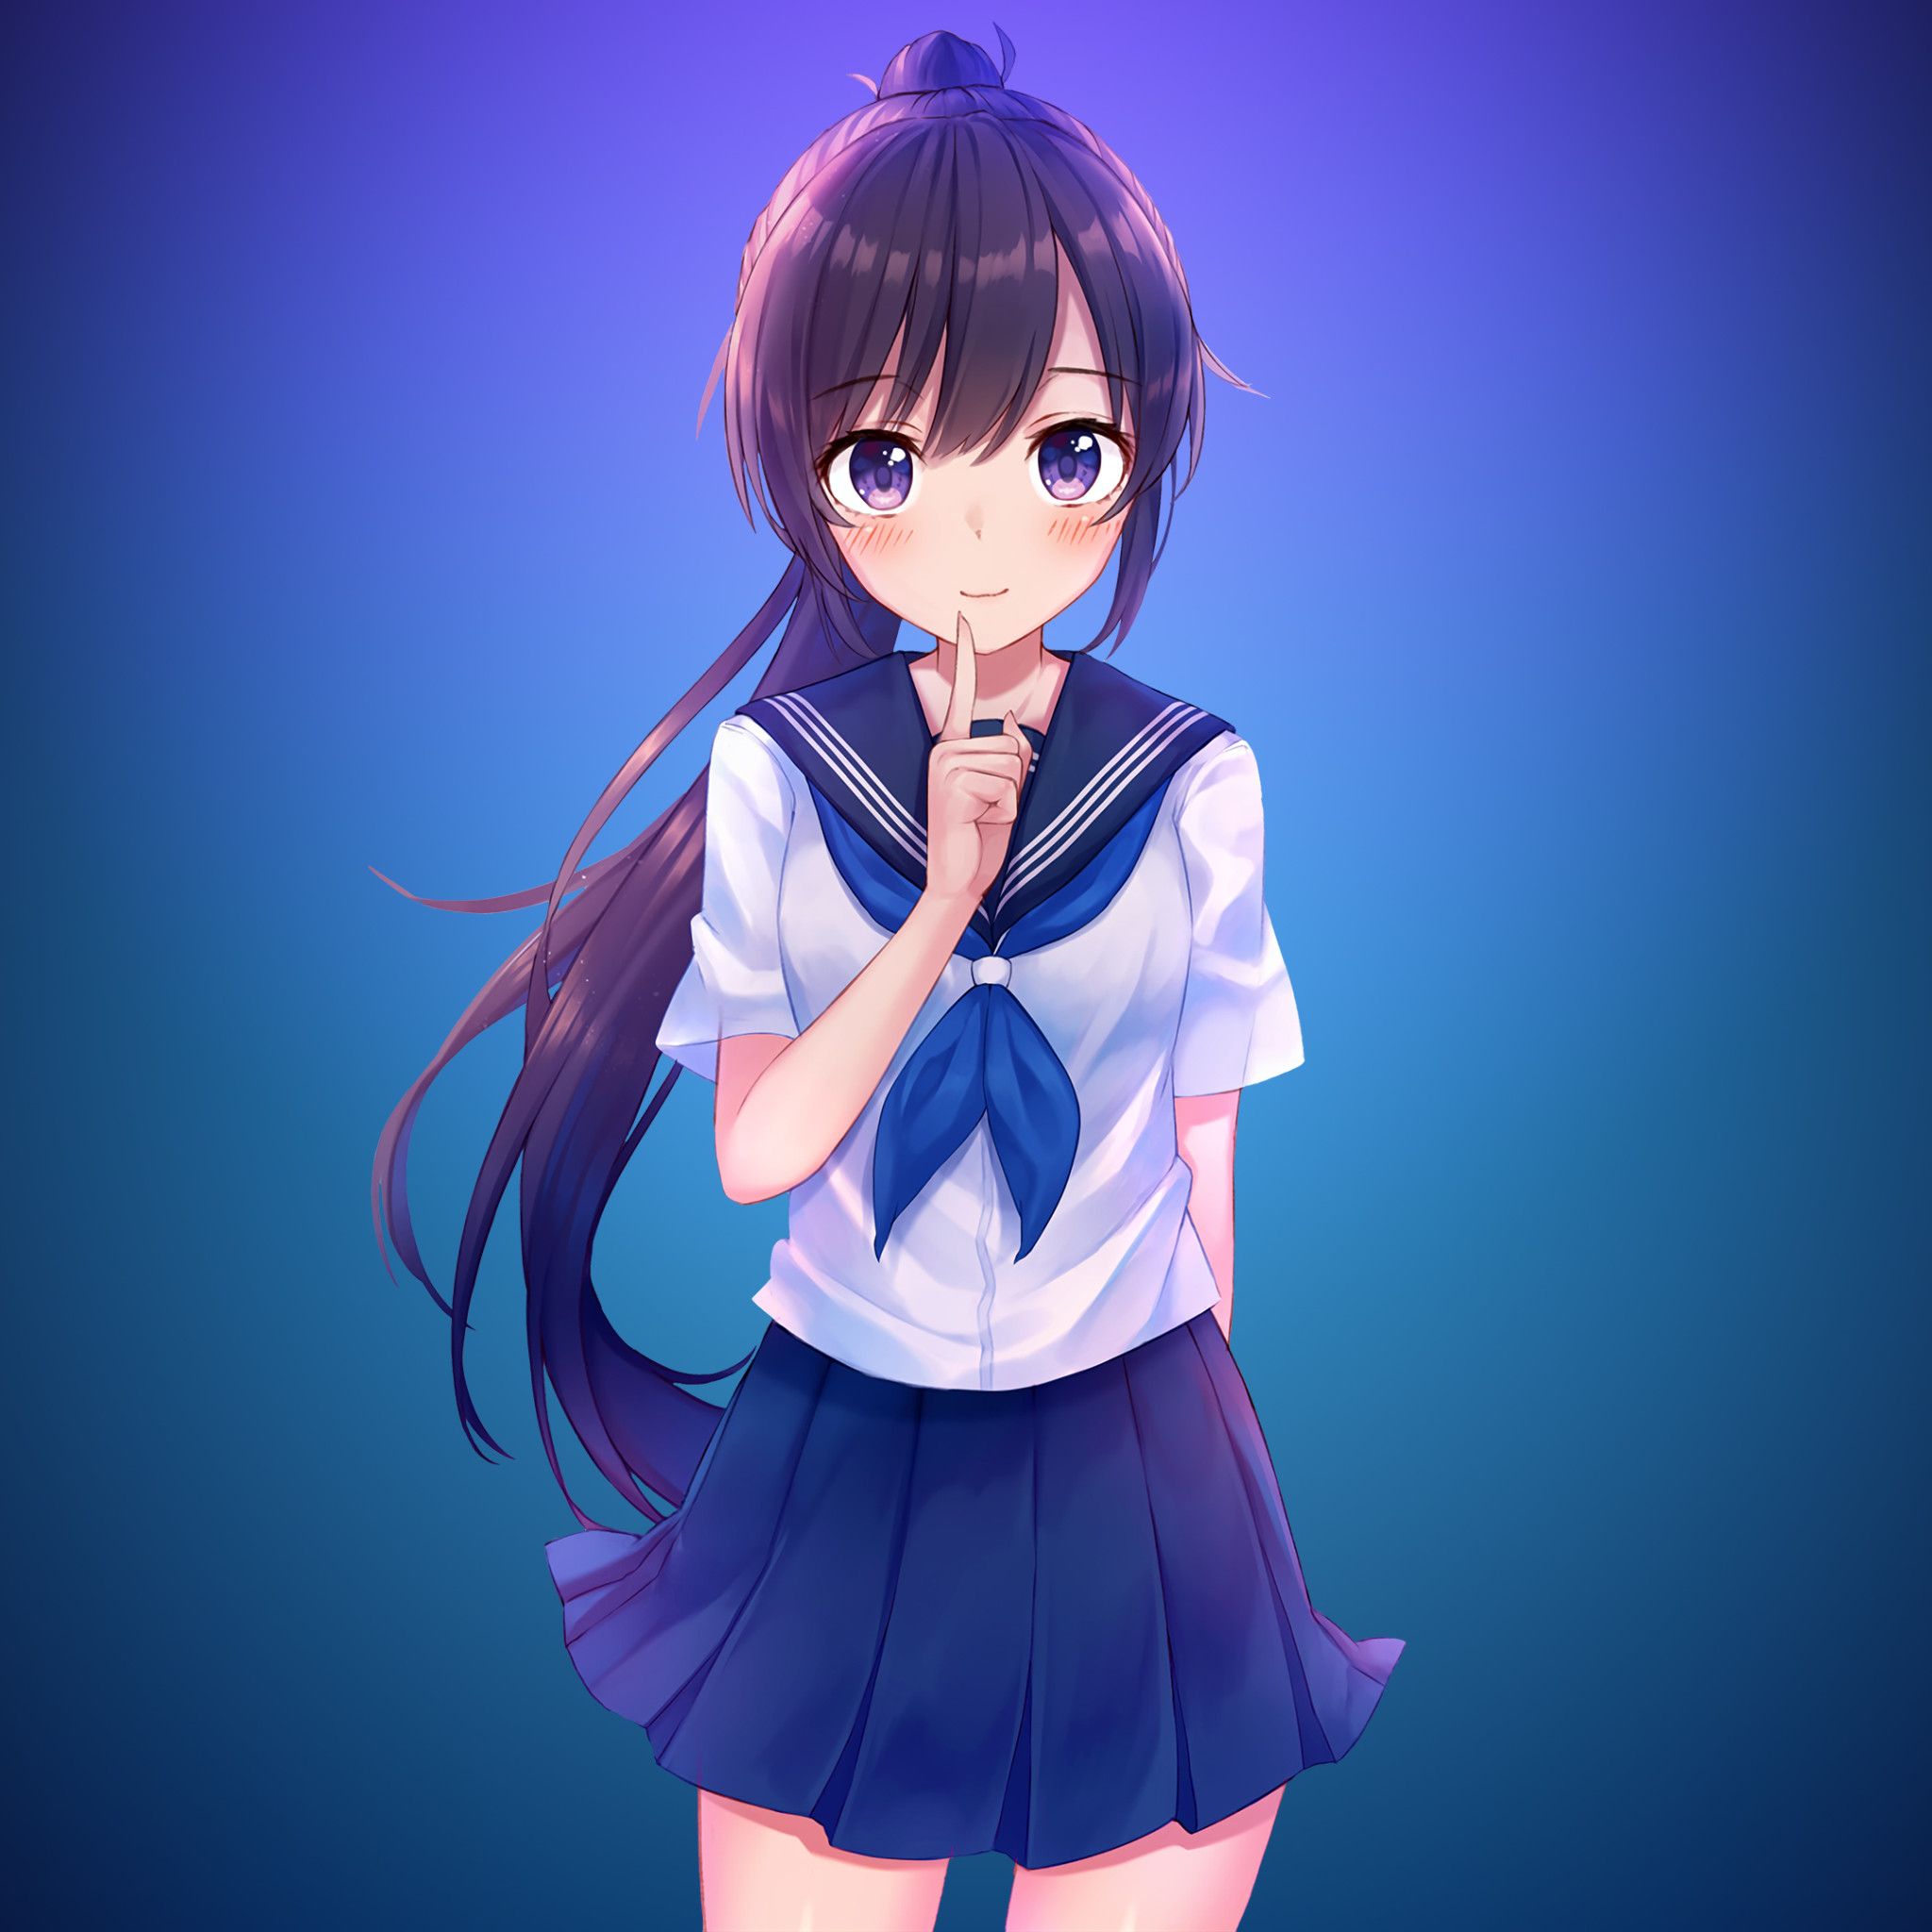 Stylish Anime Girl in Uniform | Anime girl, Girls uniforms, Anime